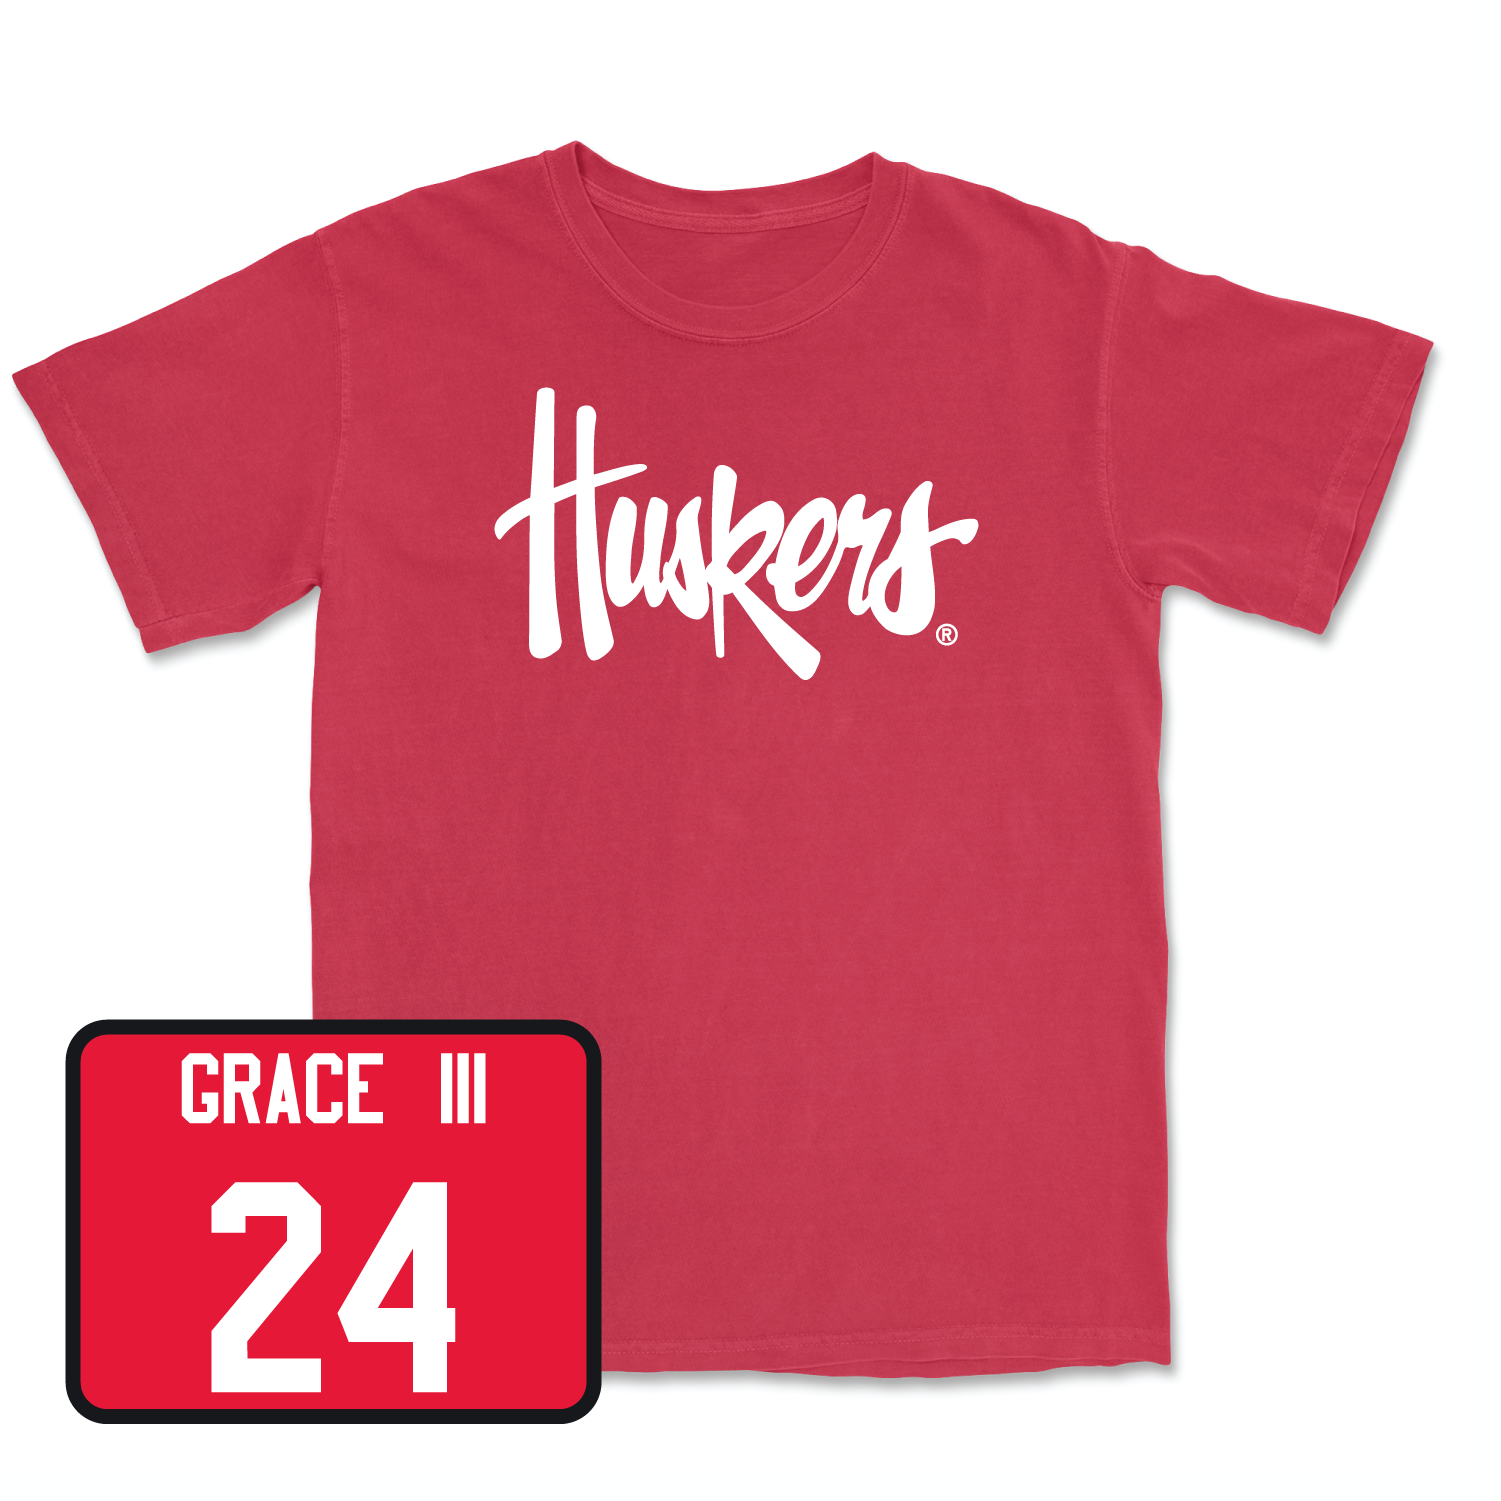 Red Men's Basketball Huskers Tee Large / Jeffrey Grace III | #24